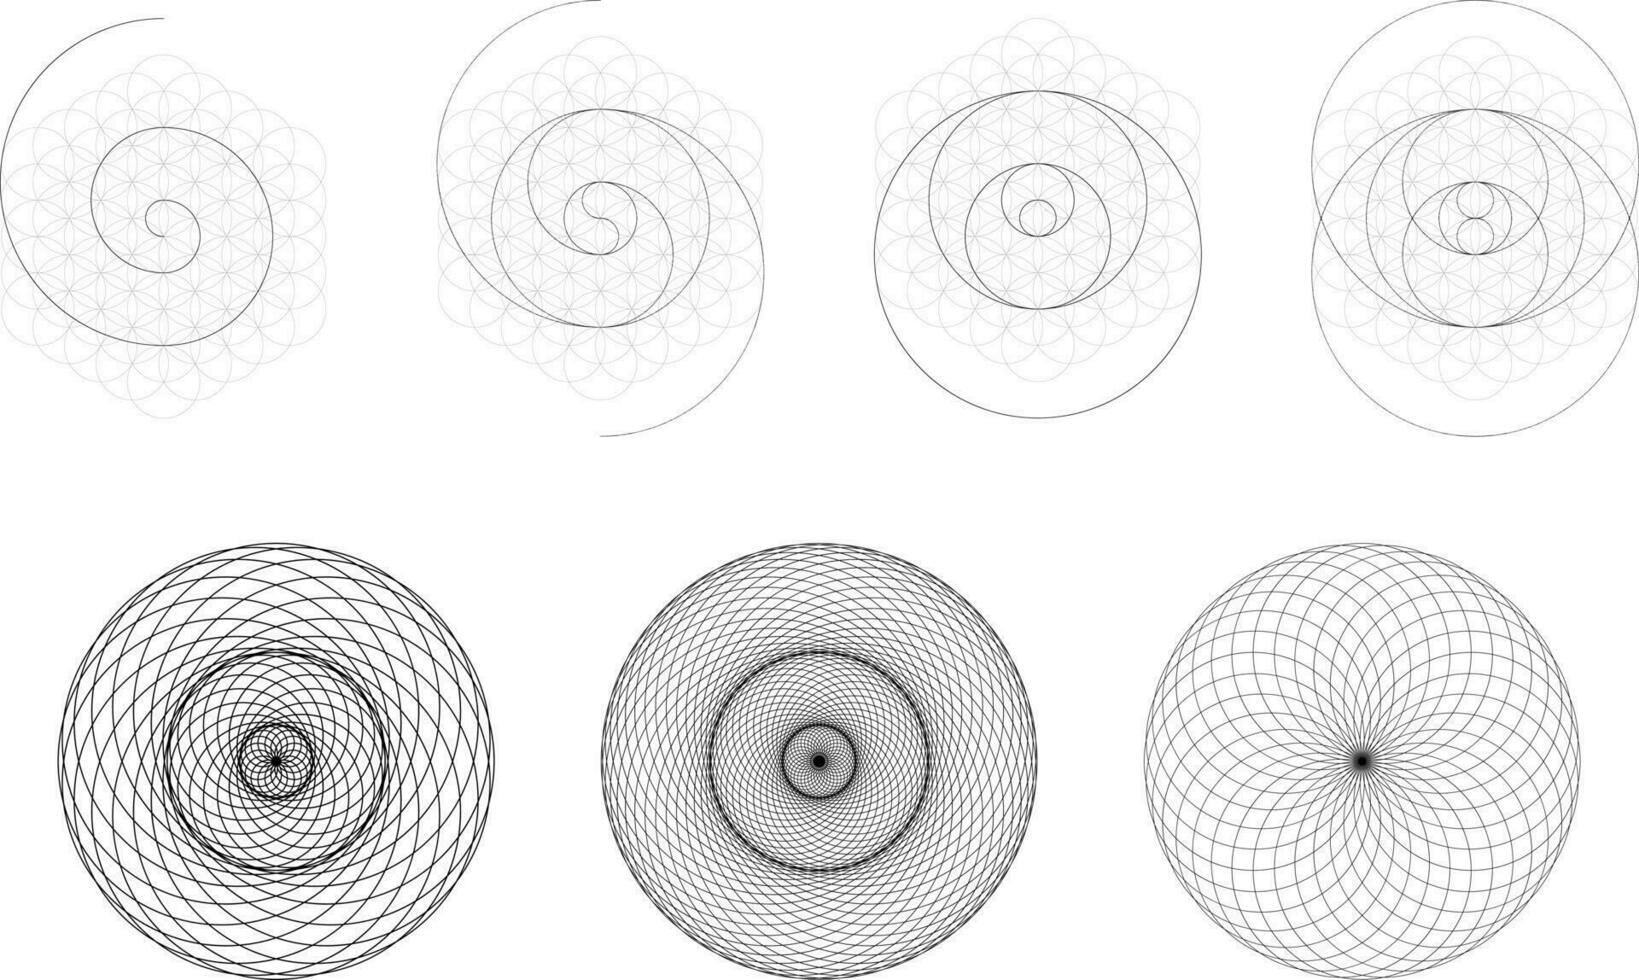 reeks van meetkundig elementen en vormen. heilig geometrie torus yantra of hypnotiserend oog ontwikkeling. vector ontwerpen